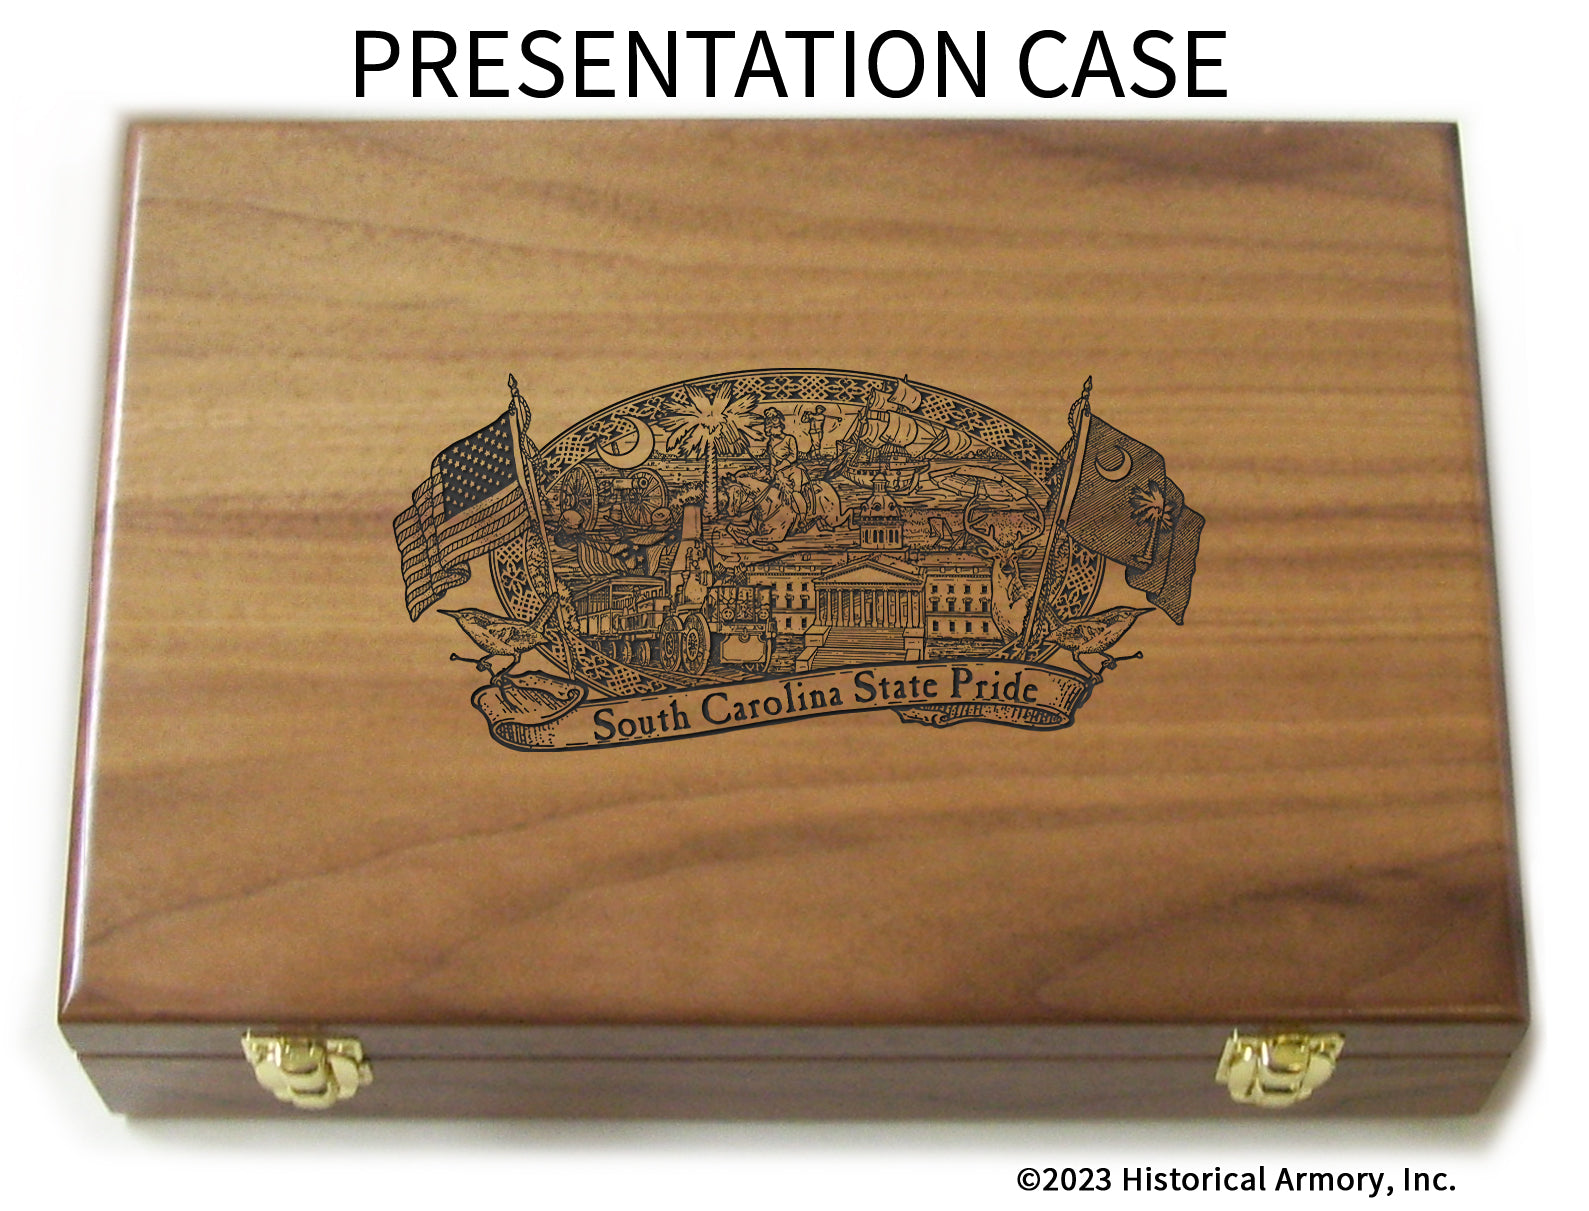 South Carolina State Pride Limited Edition Engraved 1911 Presentation Case